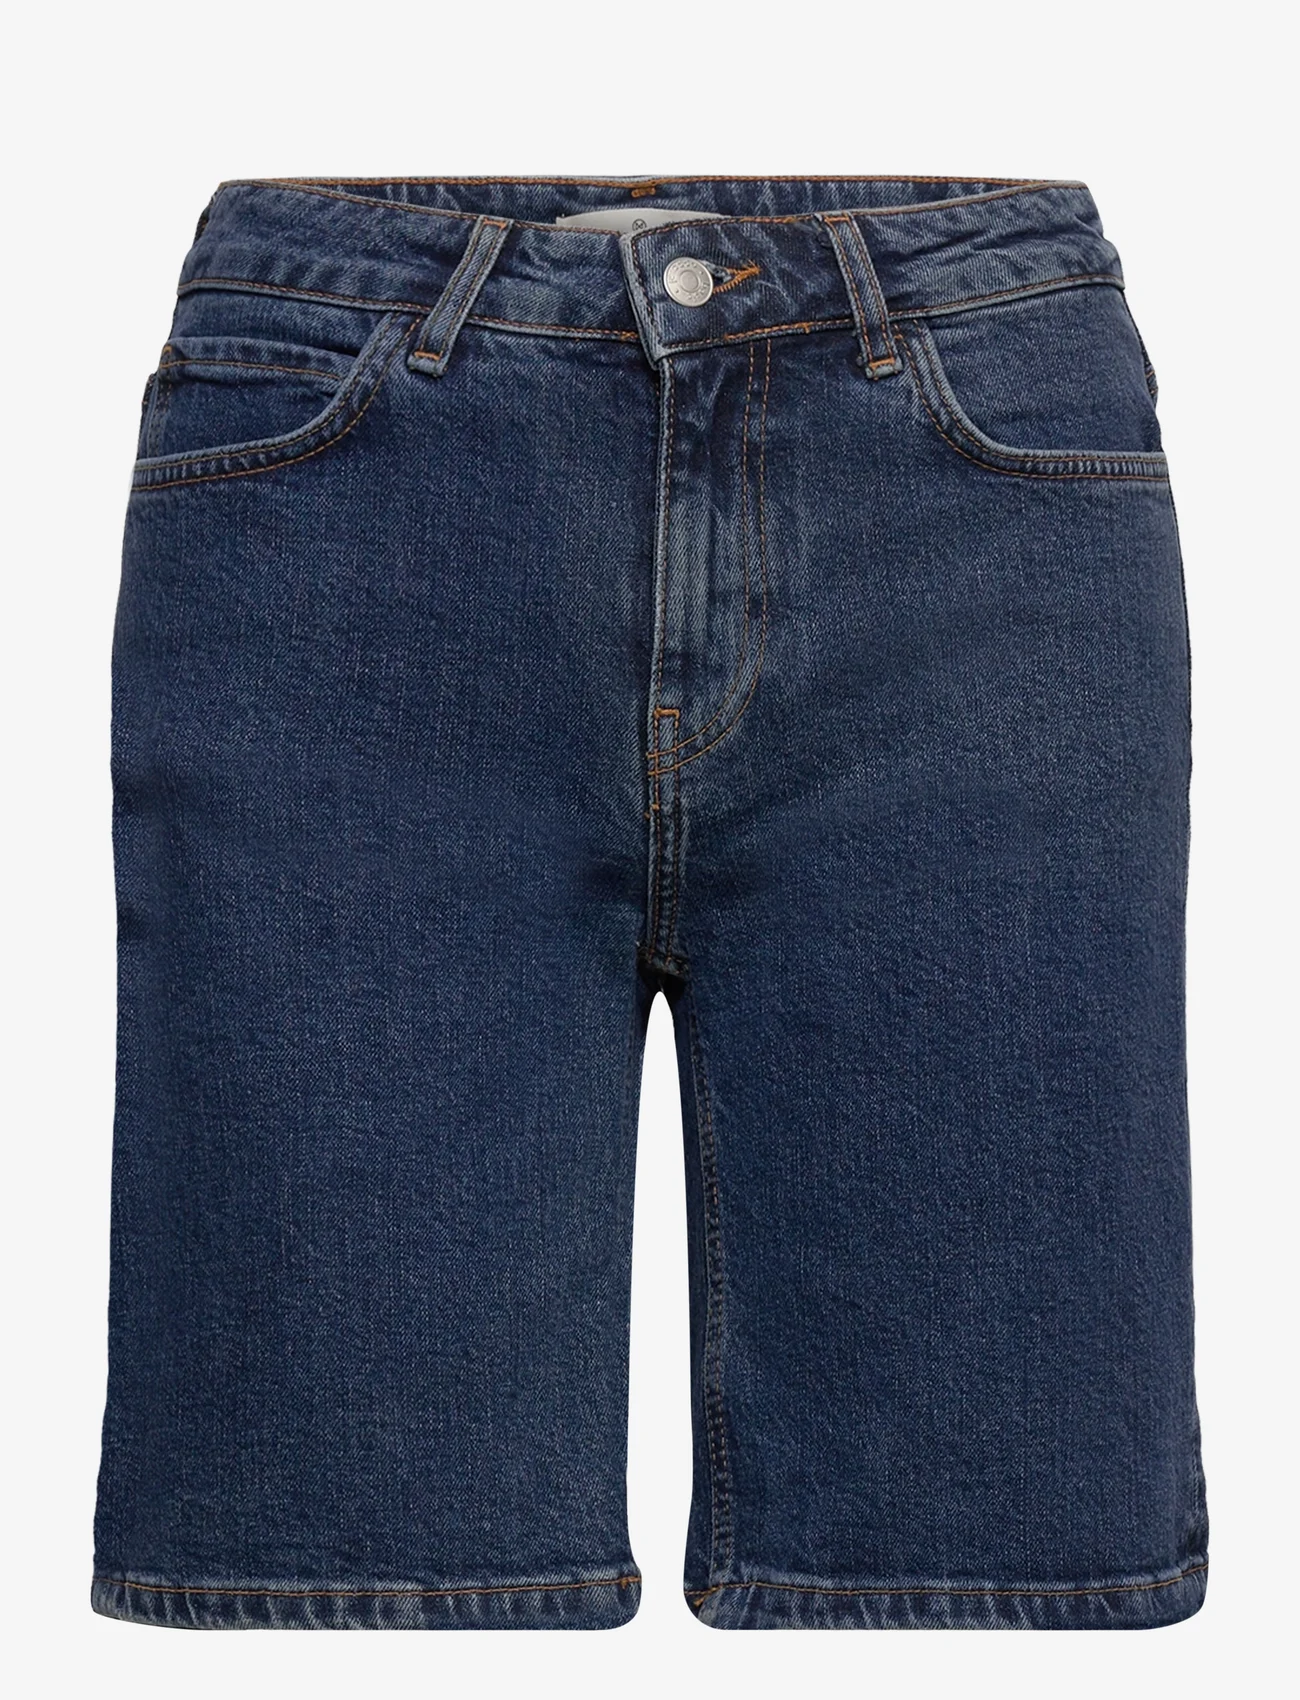 Basic Apparel - Elisa Shorts - jeansshorts - mid blue - 0